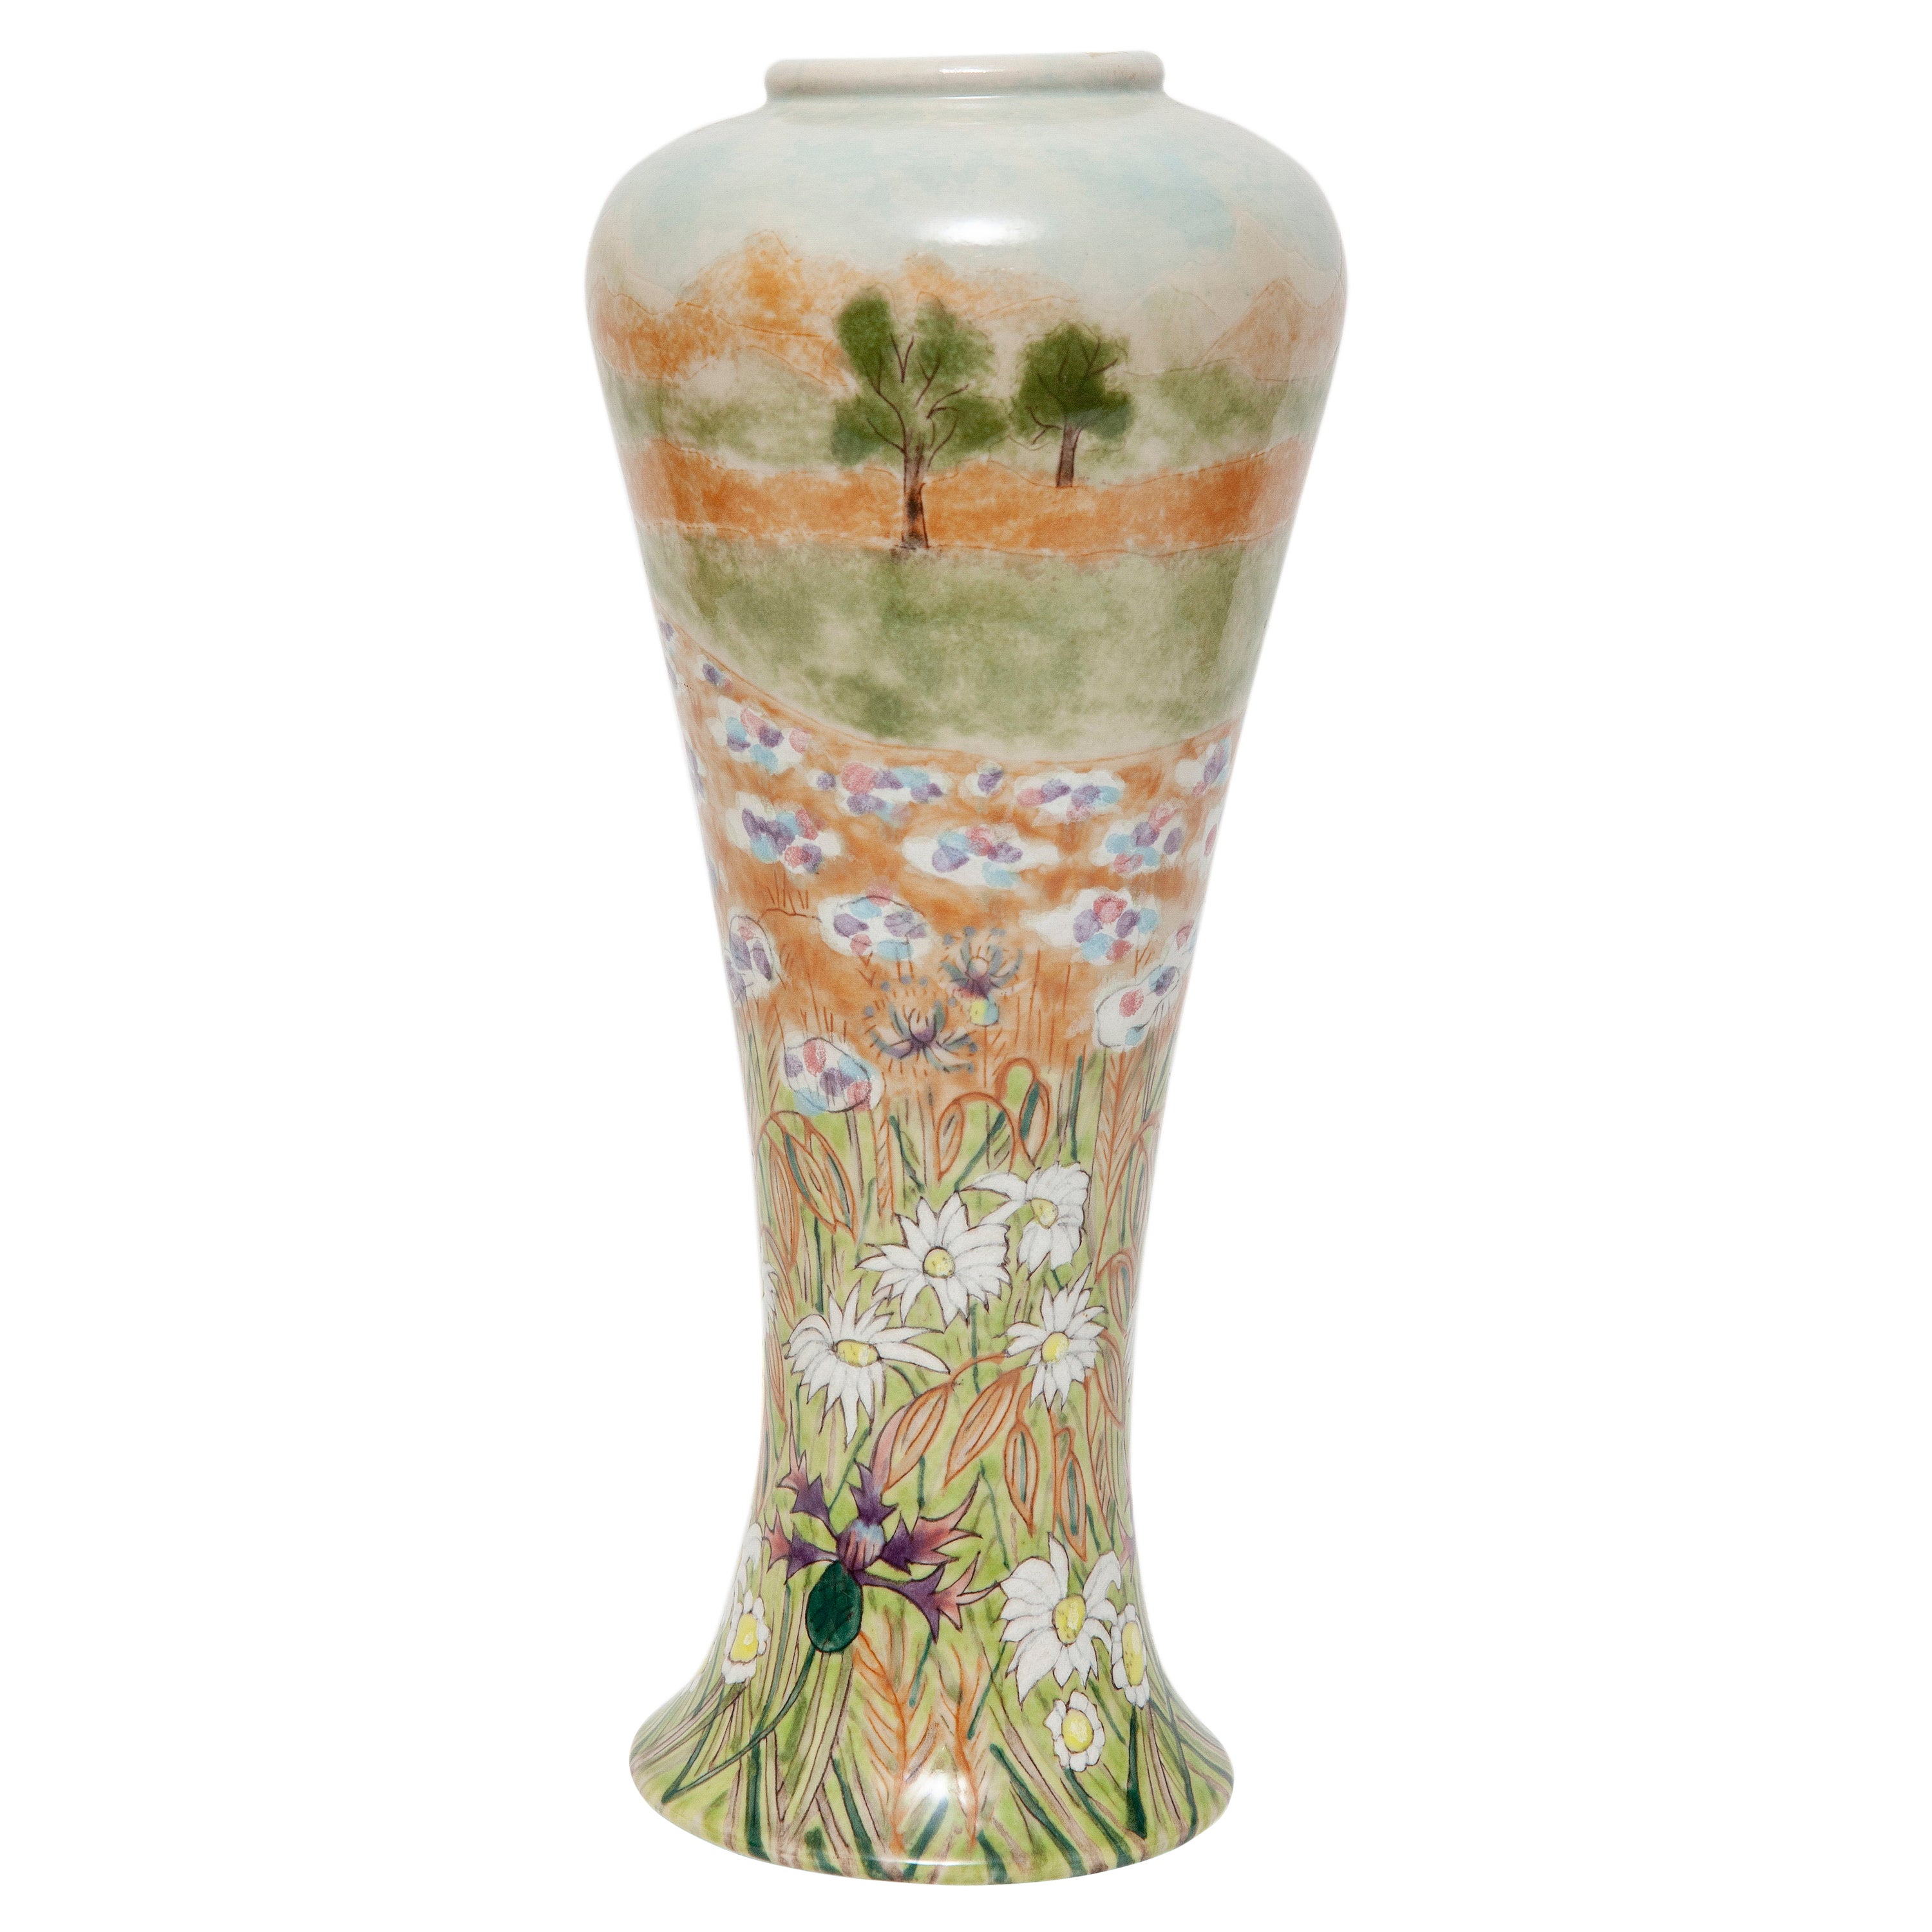 vase Cobridge summer meadow limited edition 28/250 daisy's 10" high